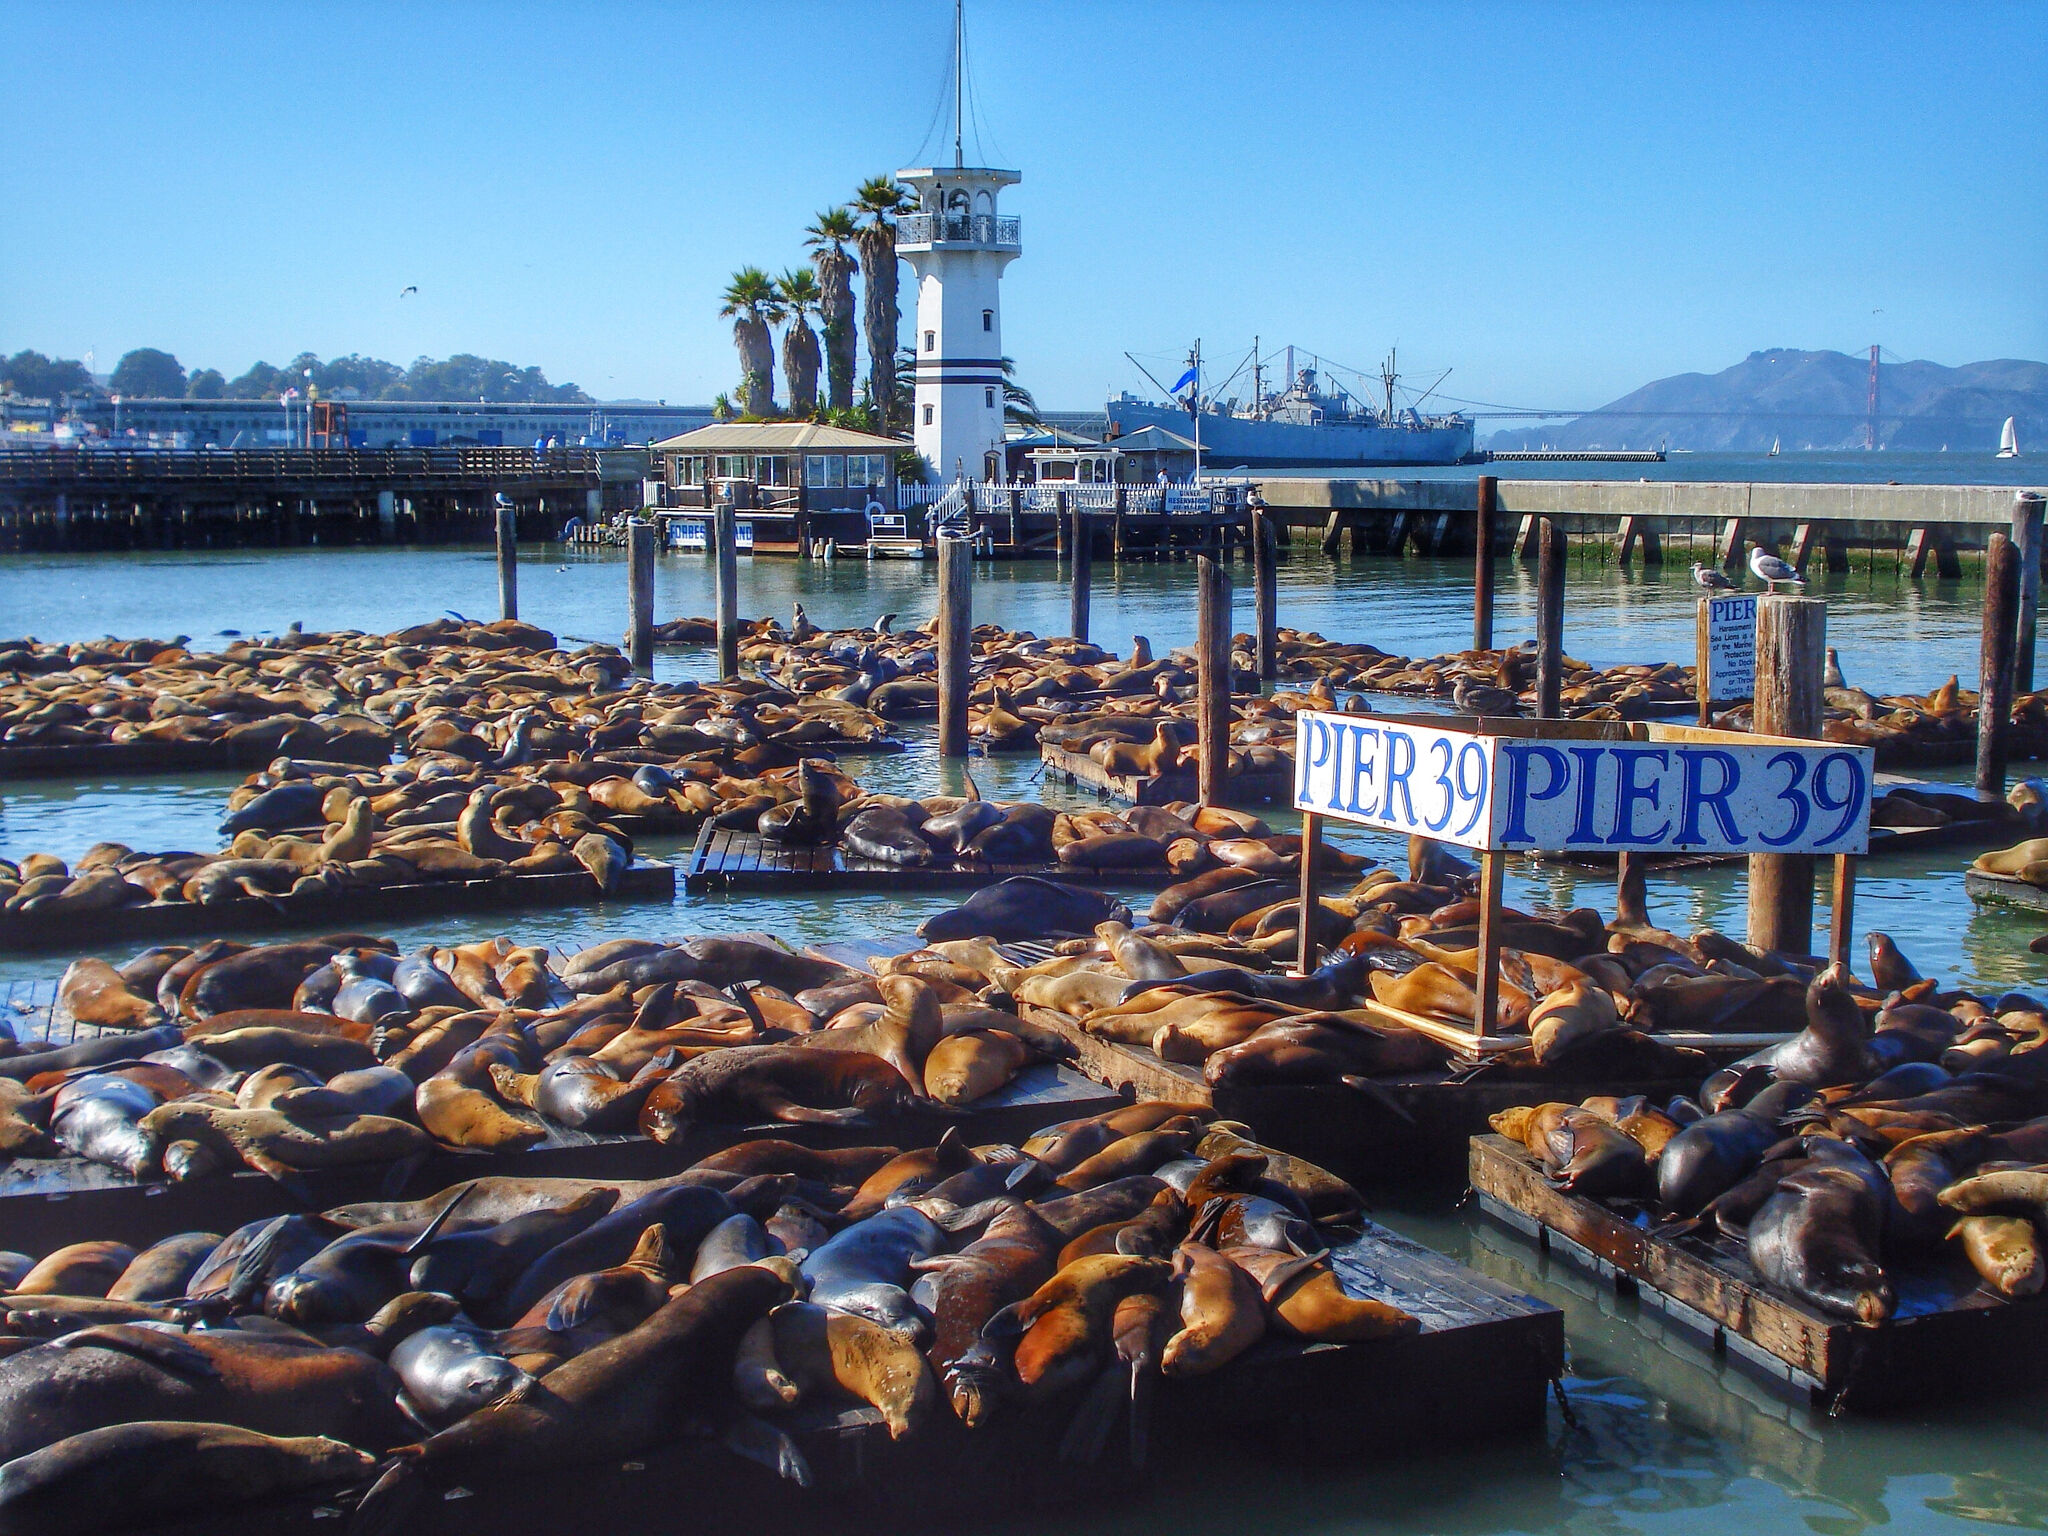 Sea Lions at San Francisco's Pier 39 